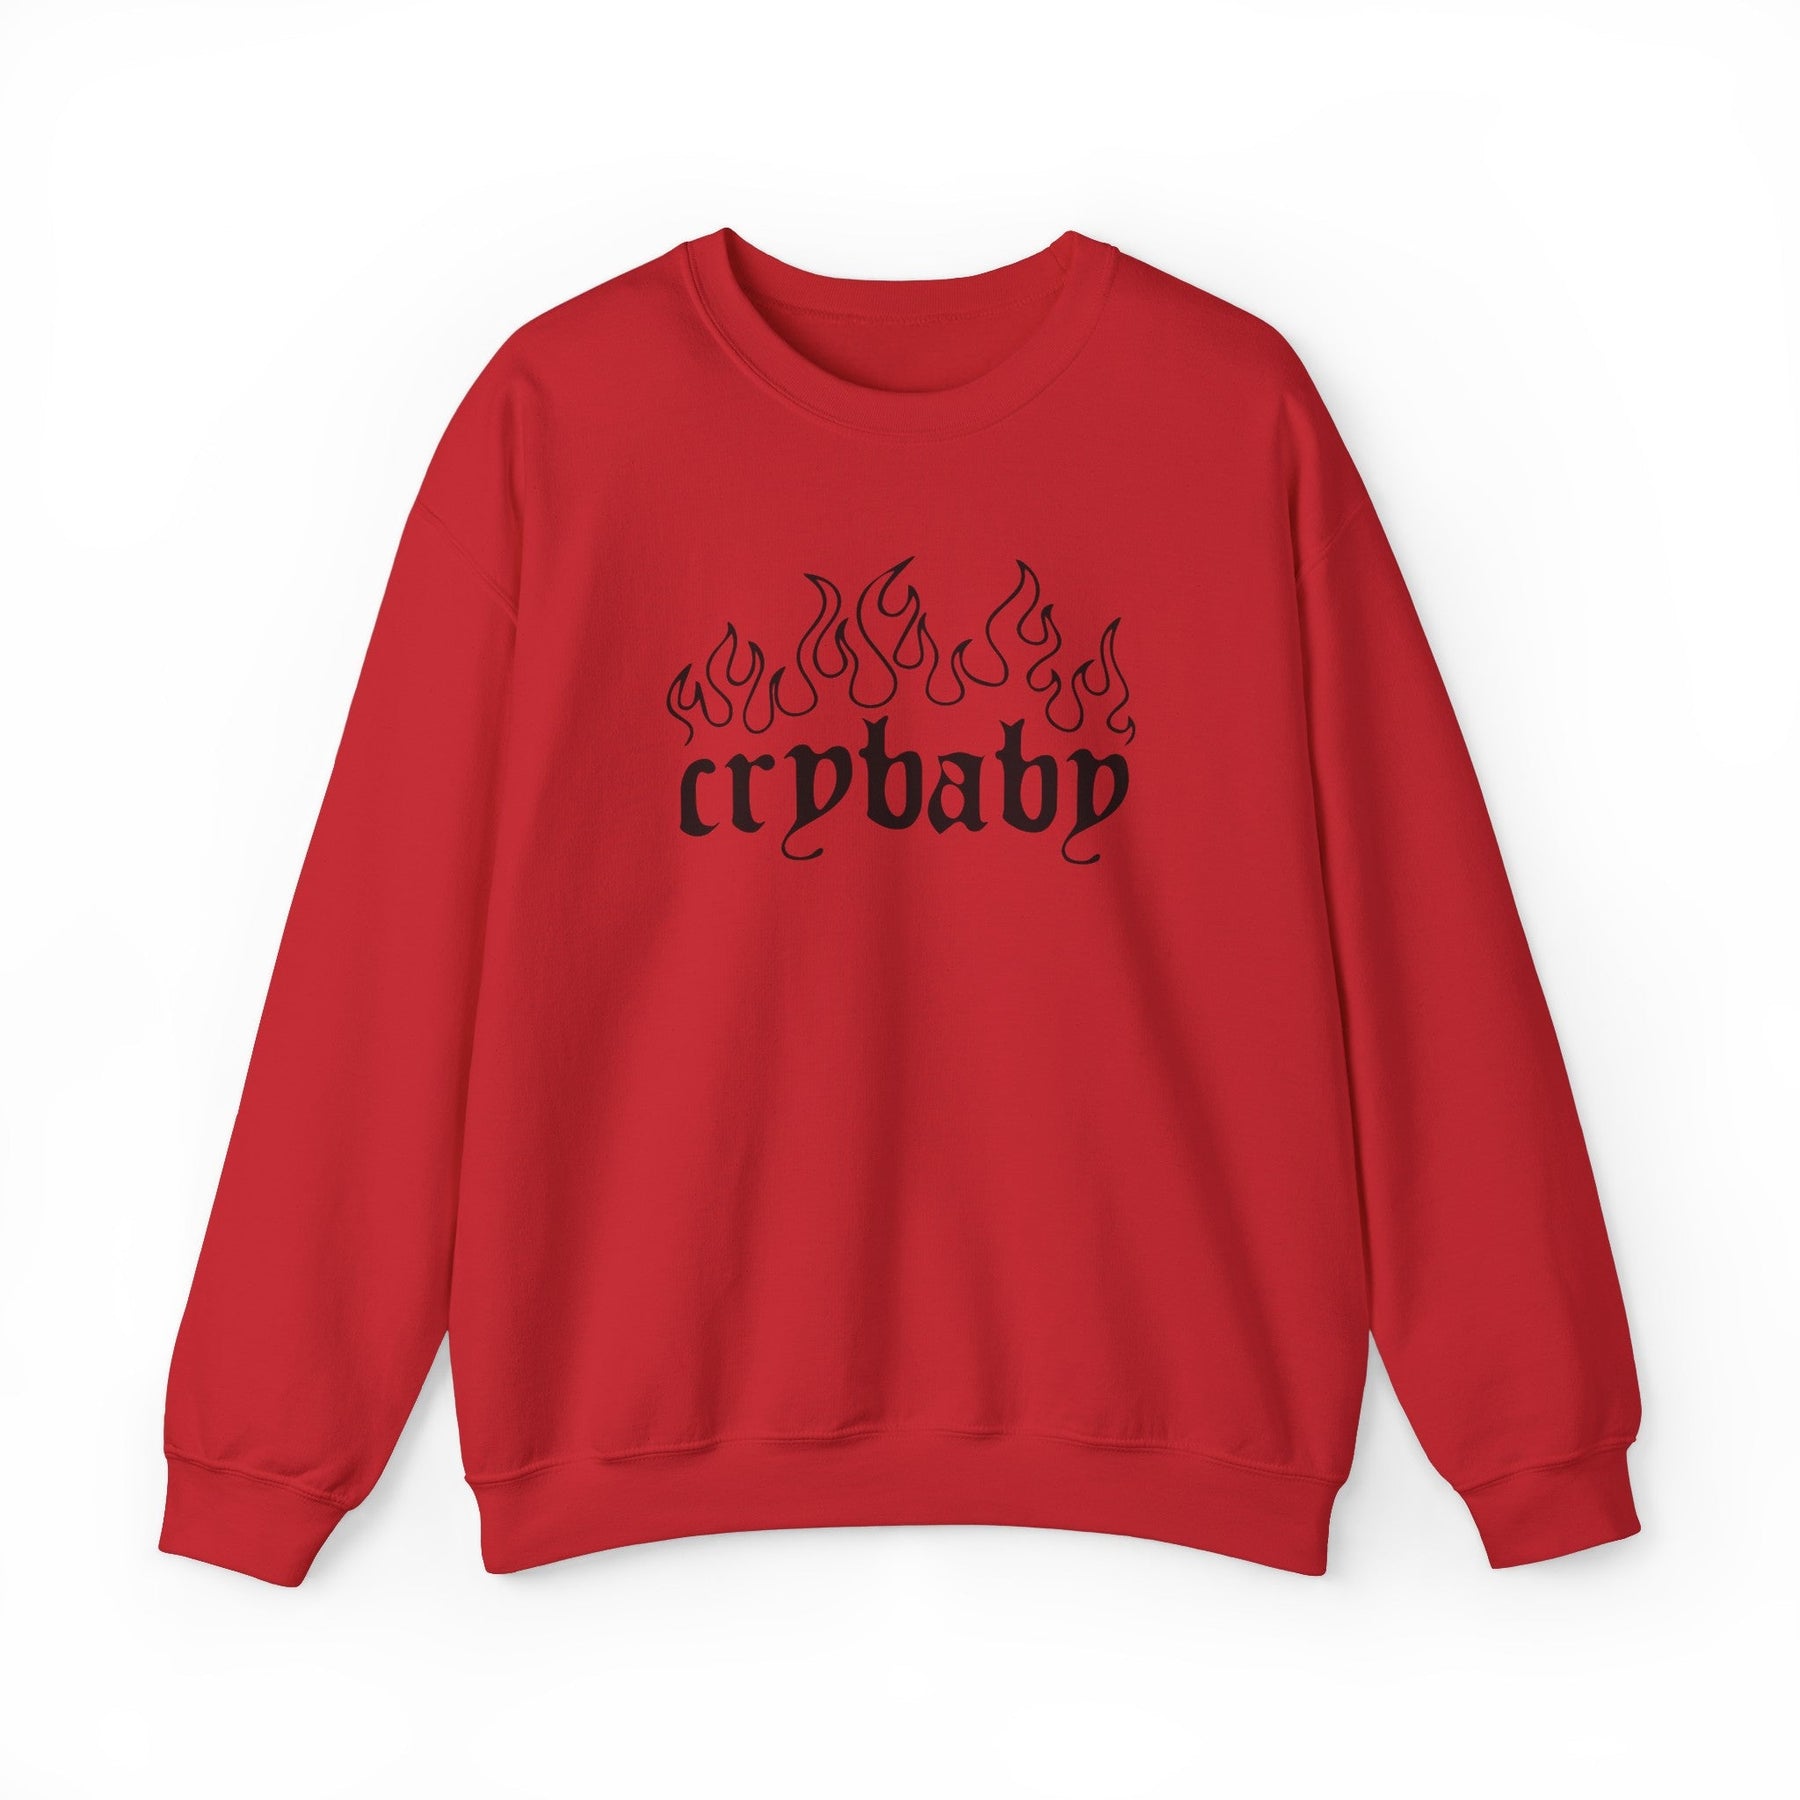 Crybaby Gothic Crew Neck Sweatshirt with Flames - Goth Cloth Co.Sweatshirt33184984320483340805